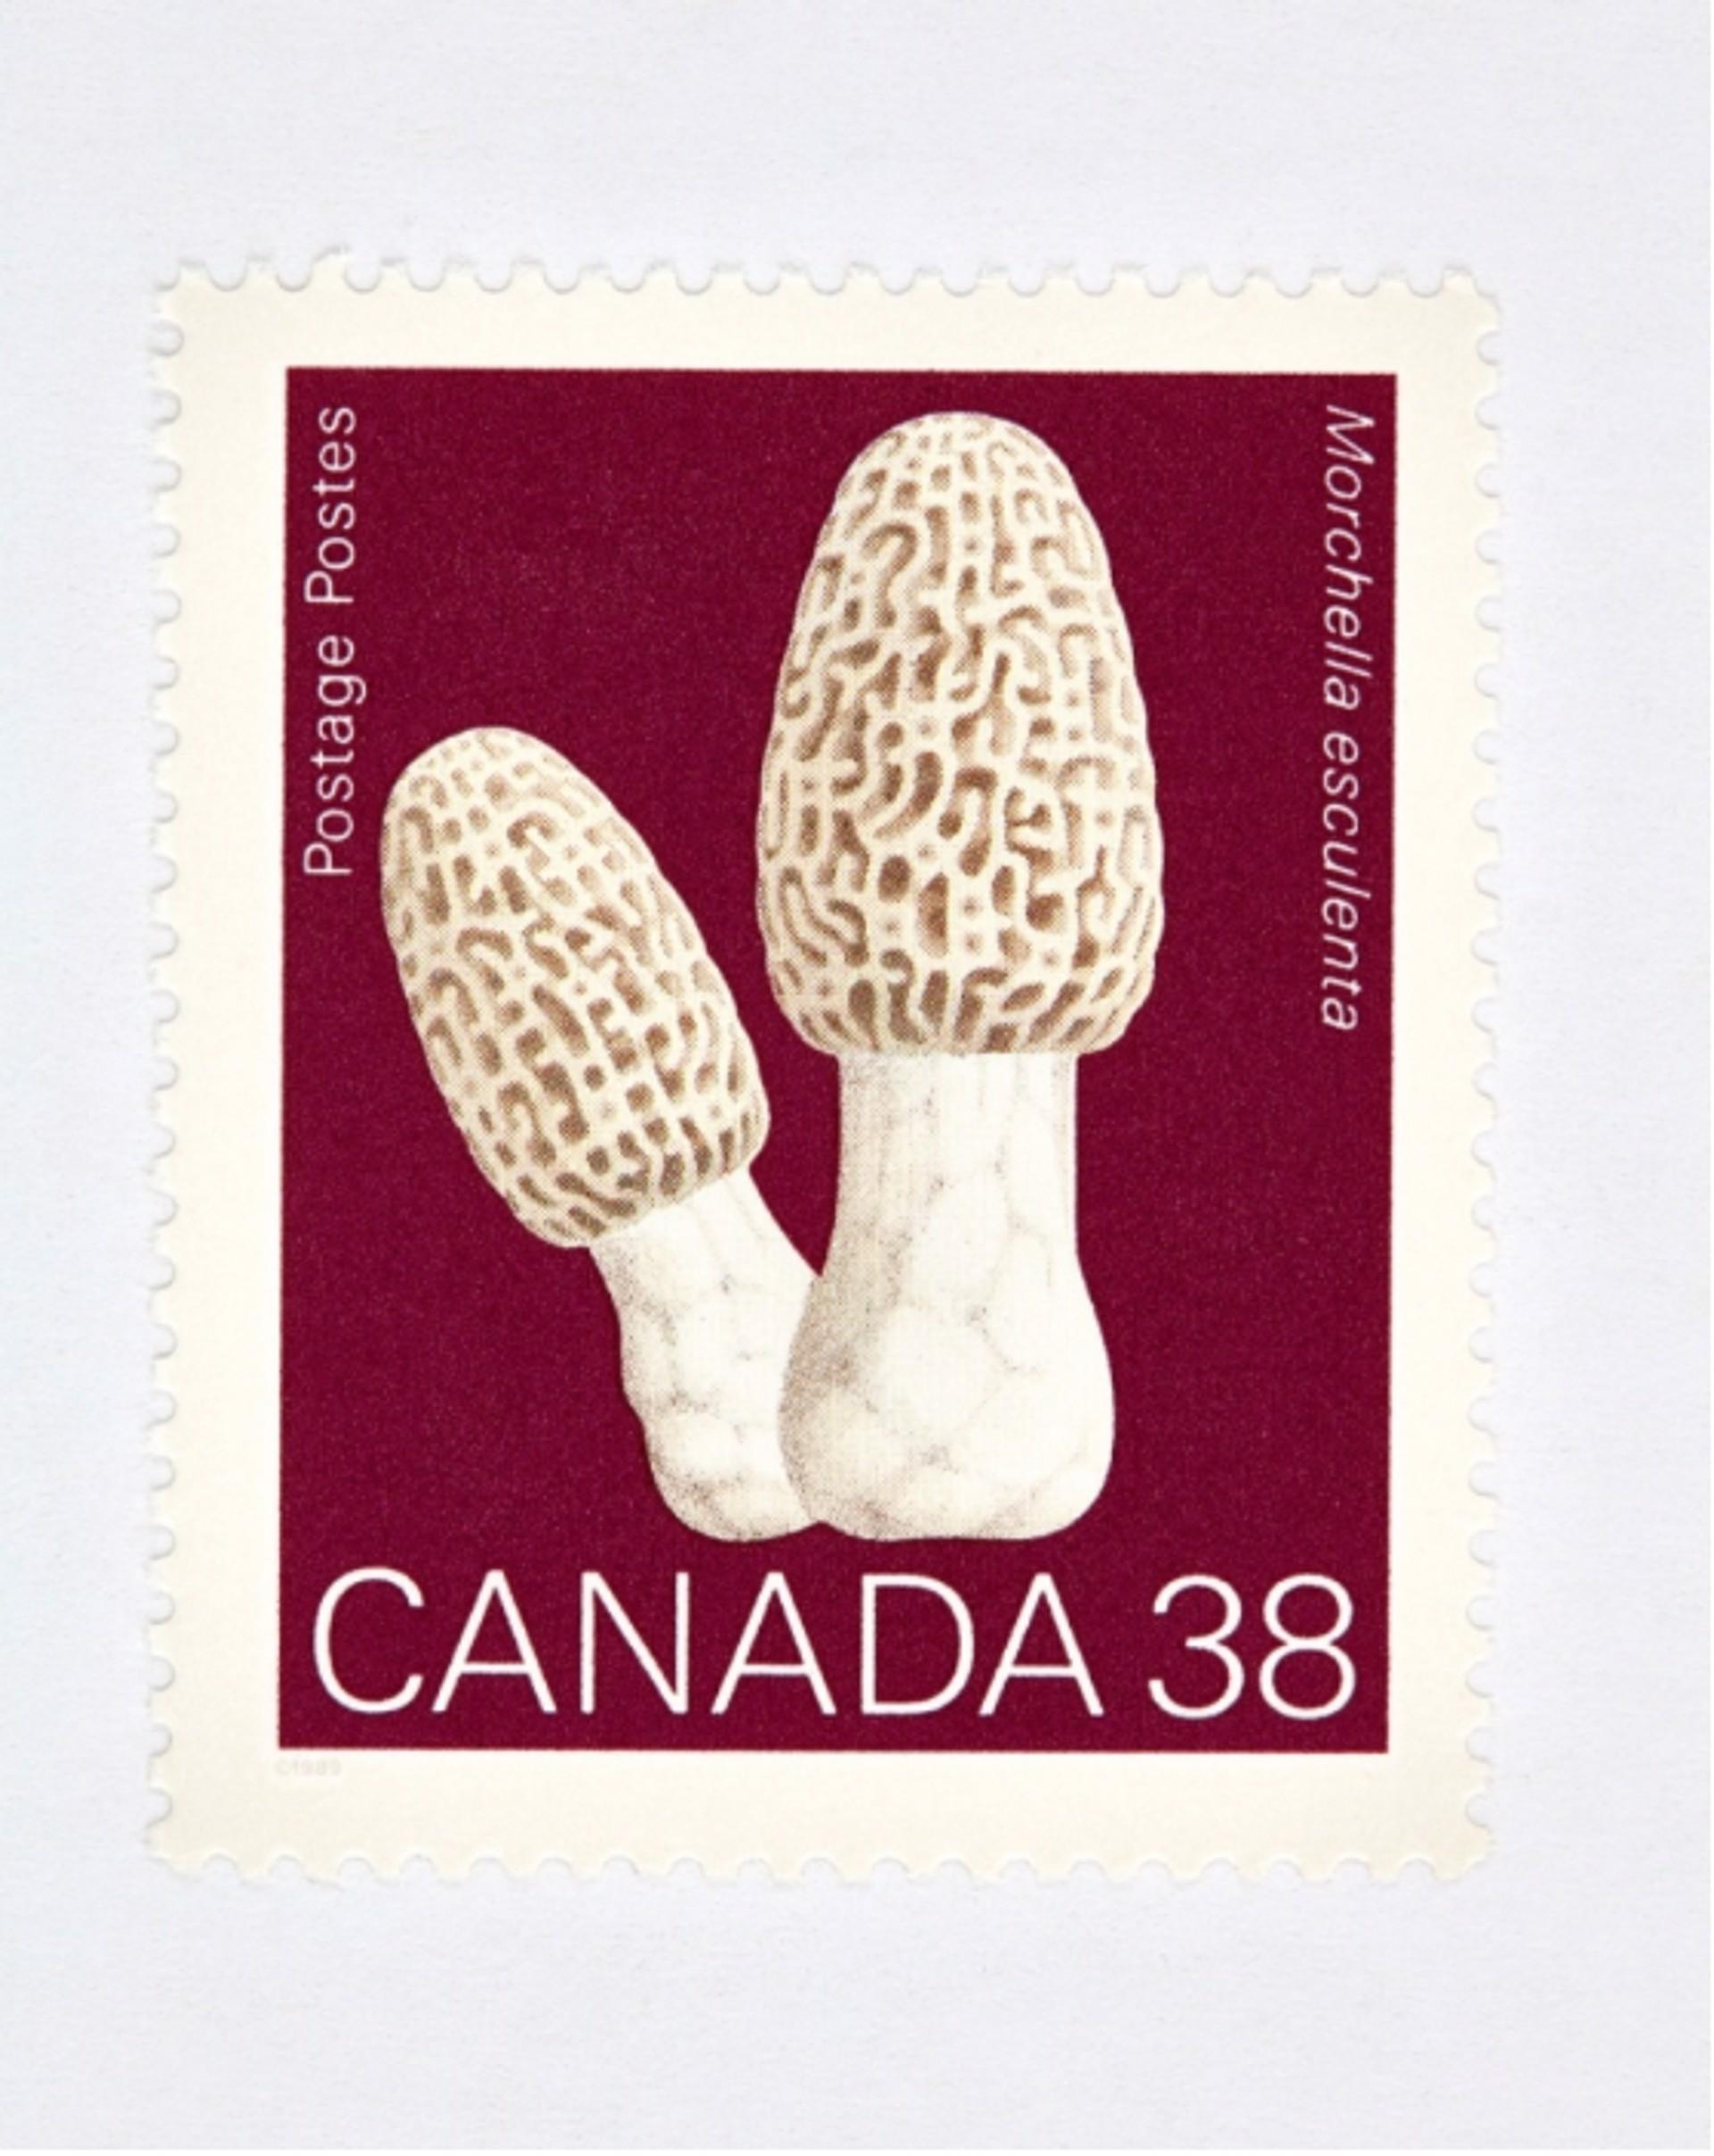 Peter Andrew Lusztyk - Kanada 38 Pilz (Rot), Fotografie 2021, Nachdruck